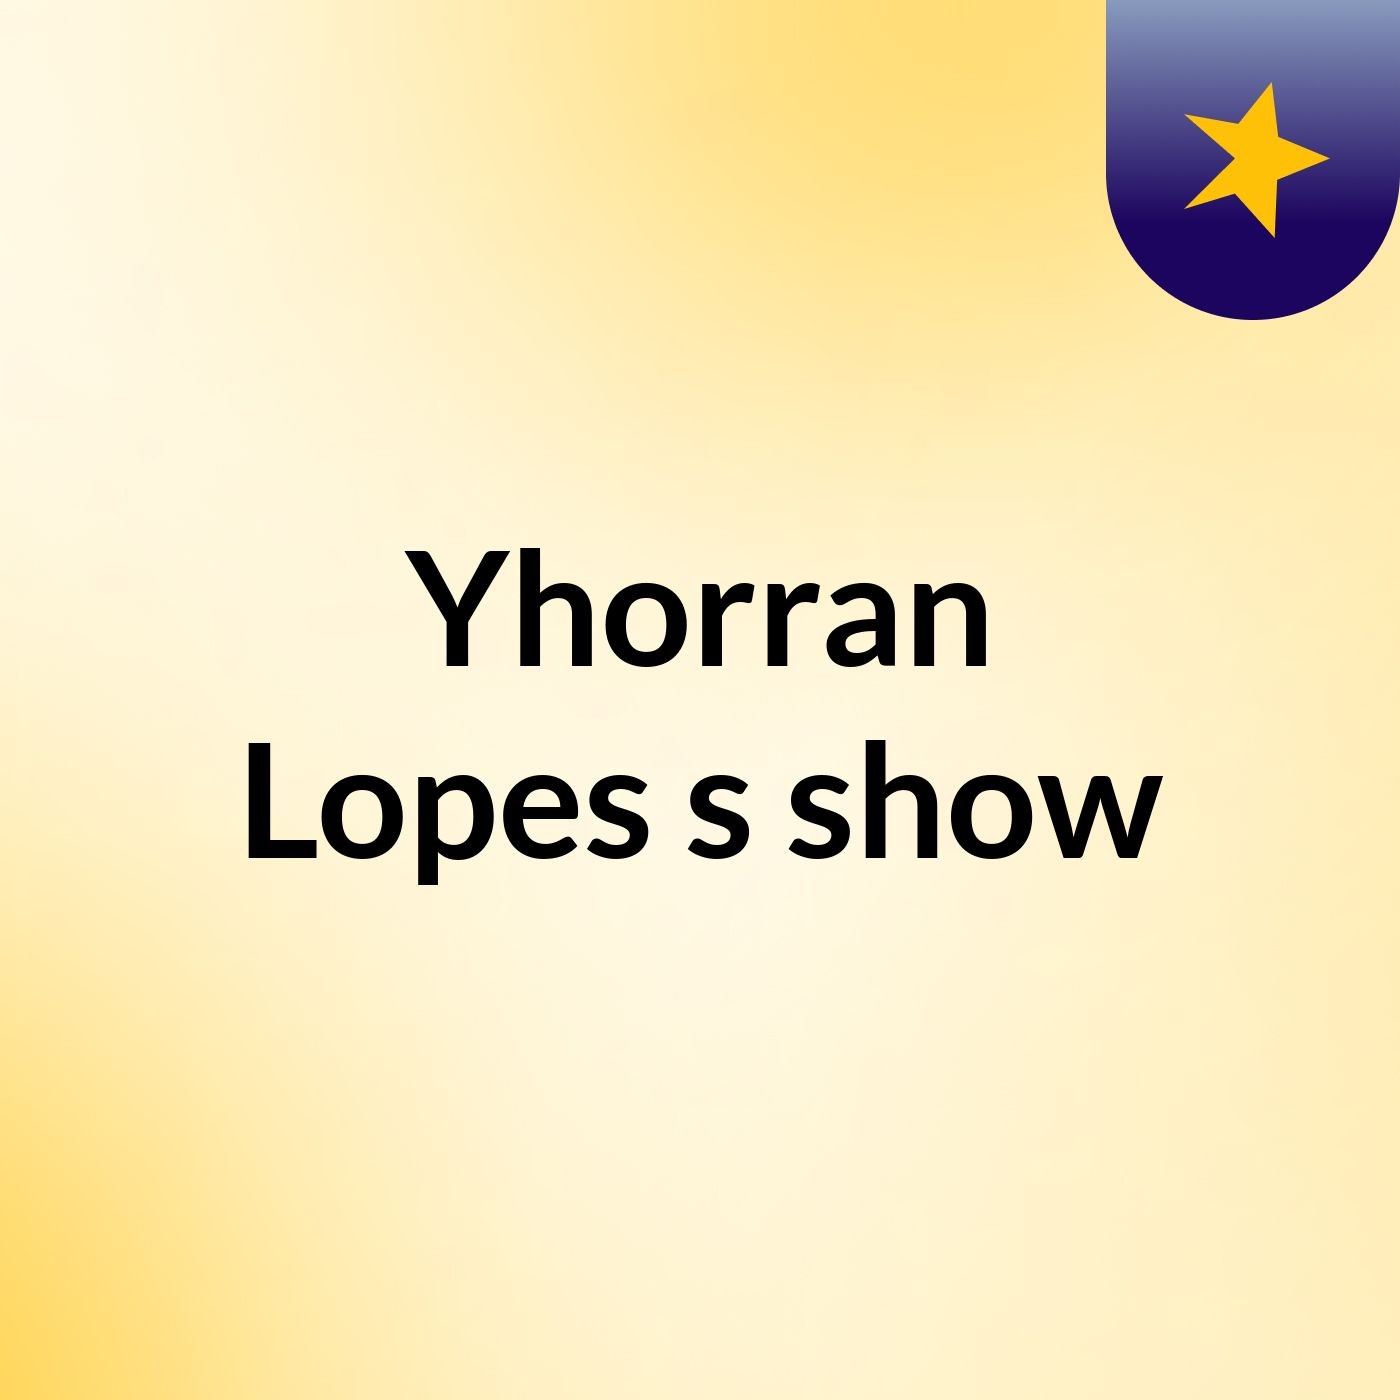 Yhorran Lopes's show